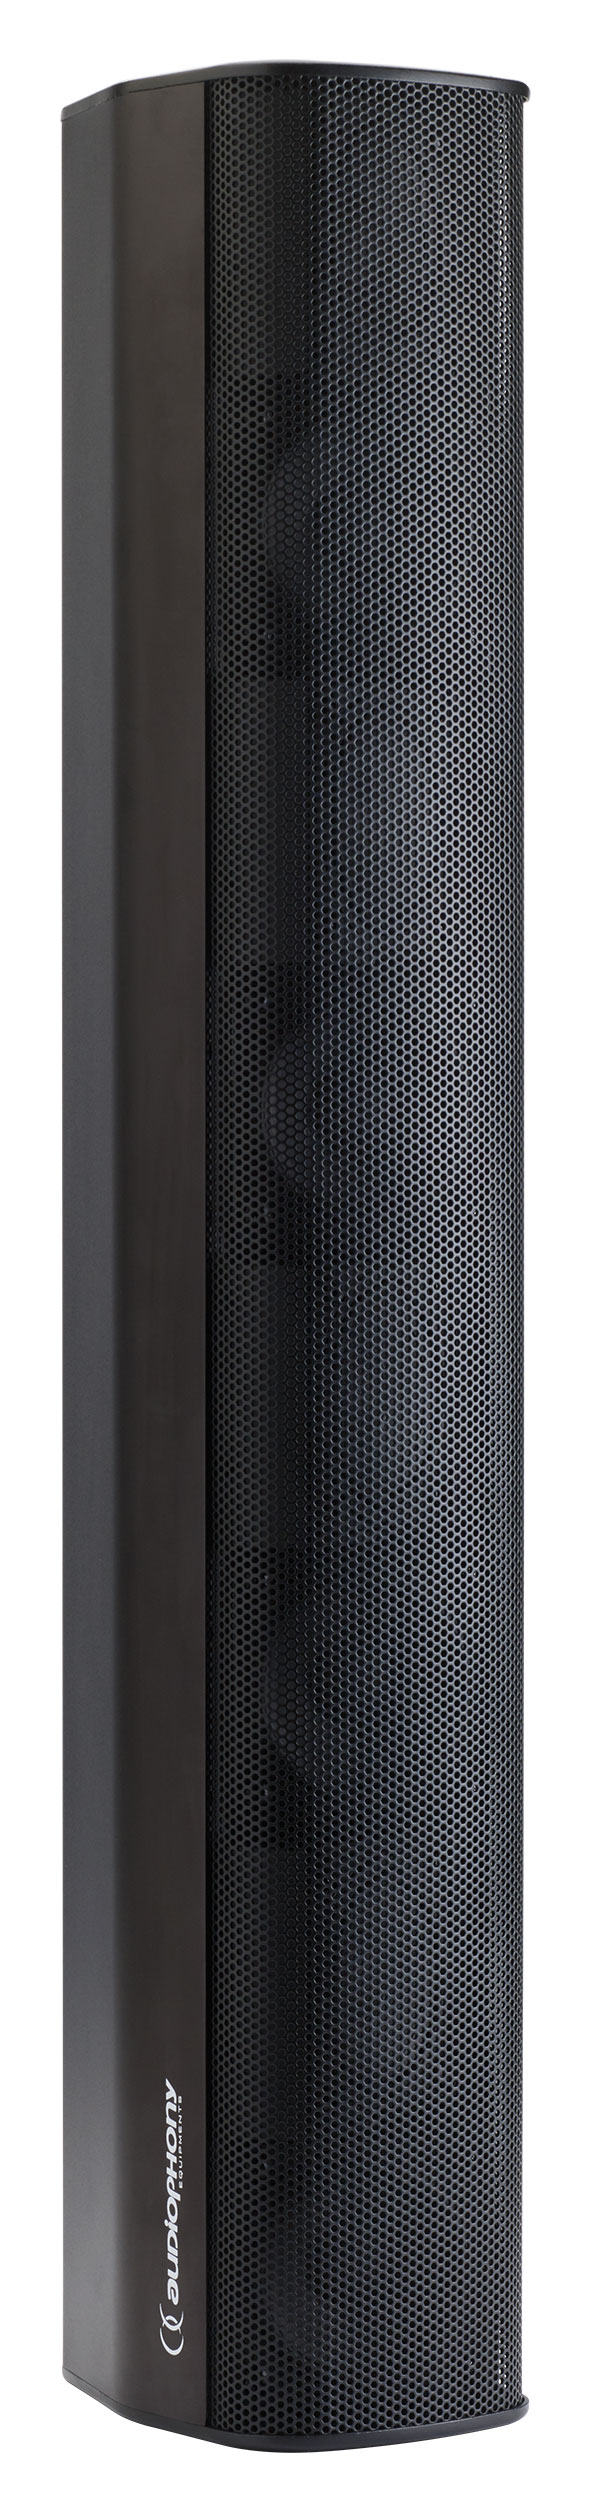 160W / 16 Ohms Column for installation with 8x3" speaker